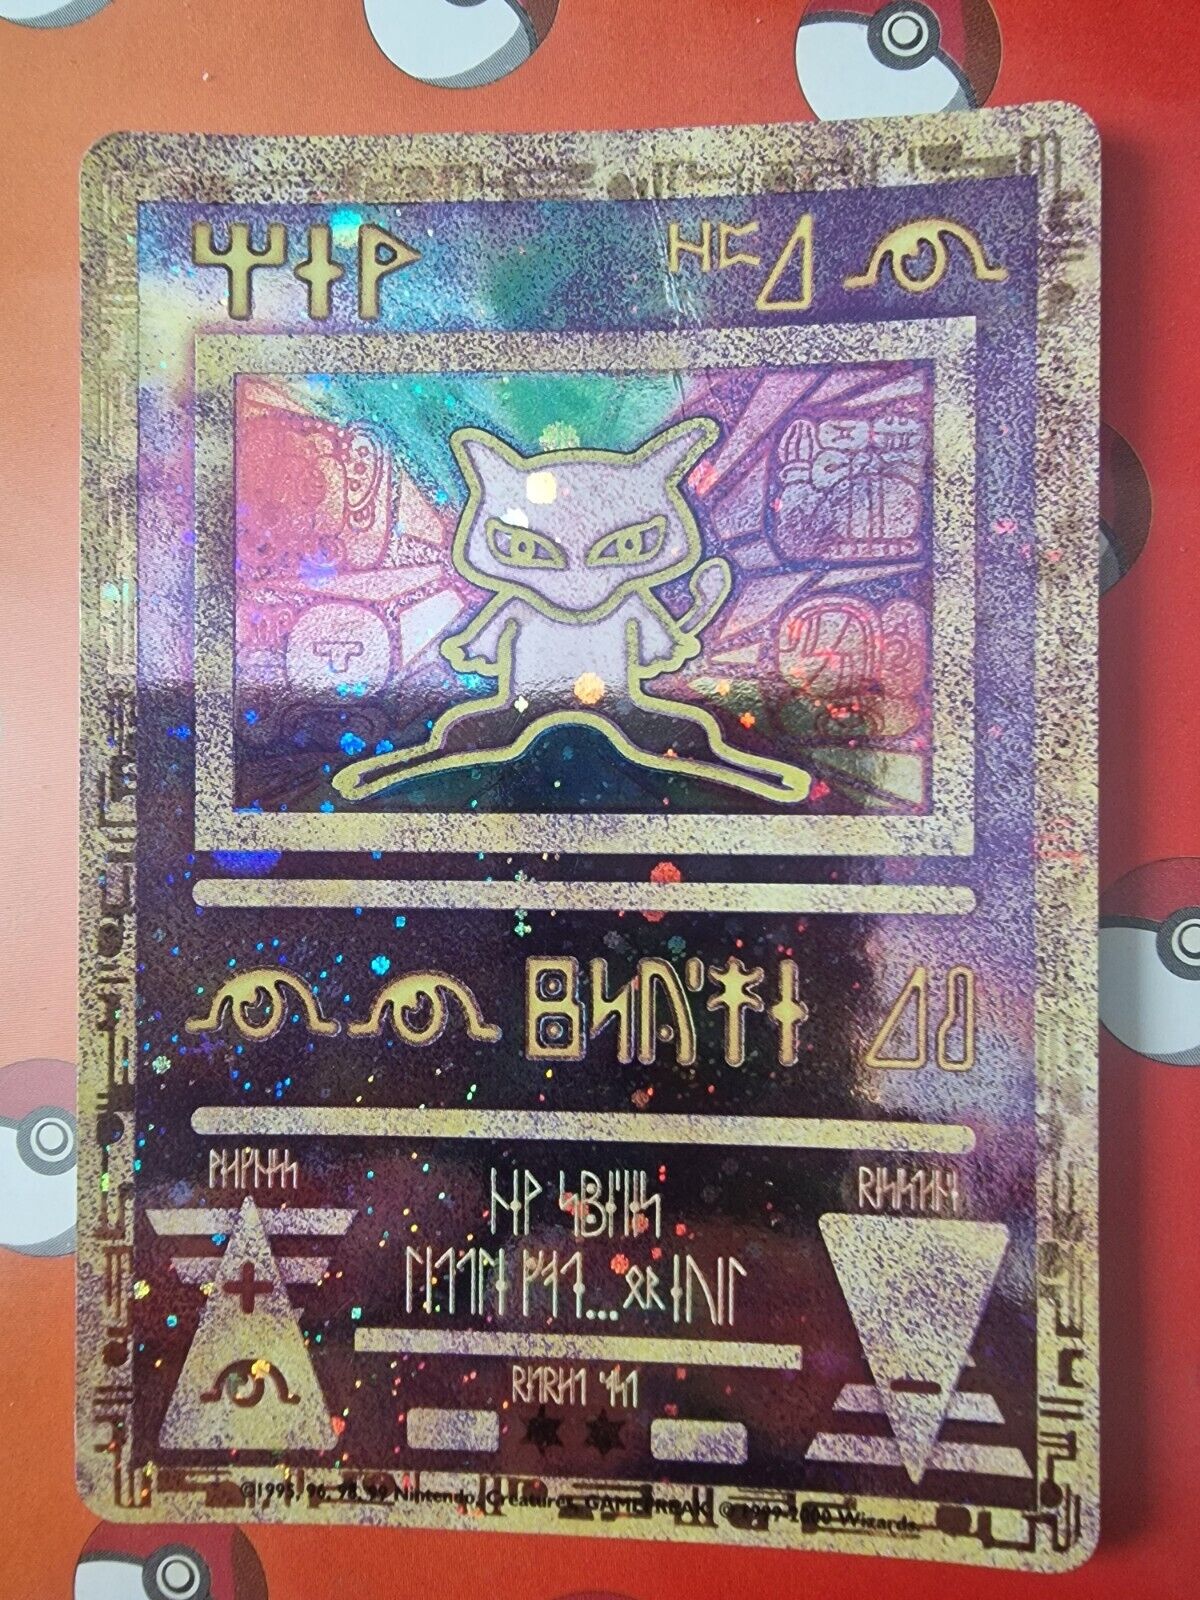 ancient mew pokemon card